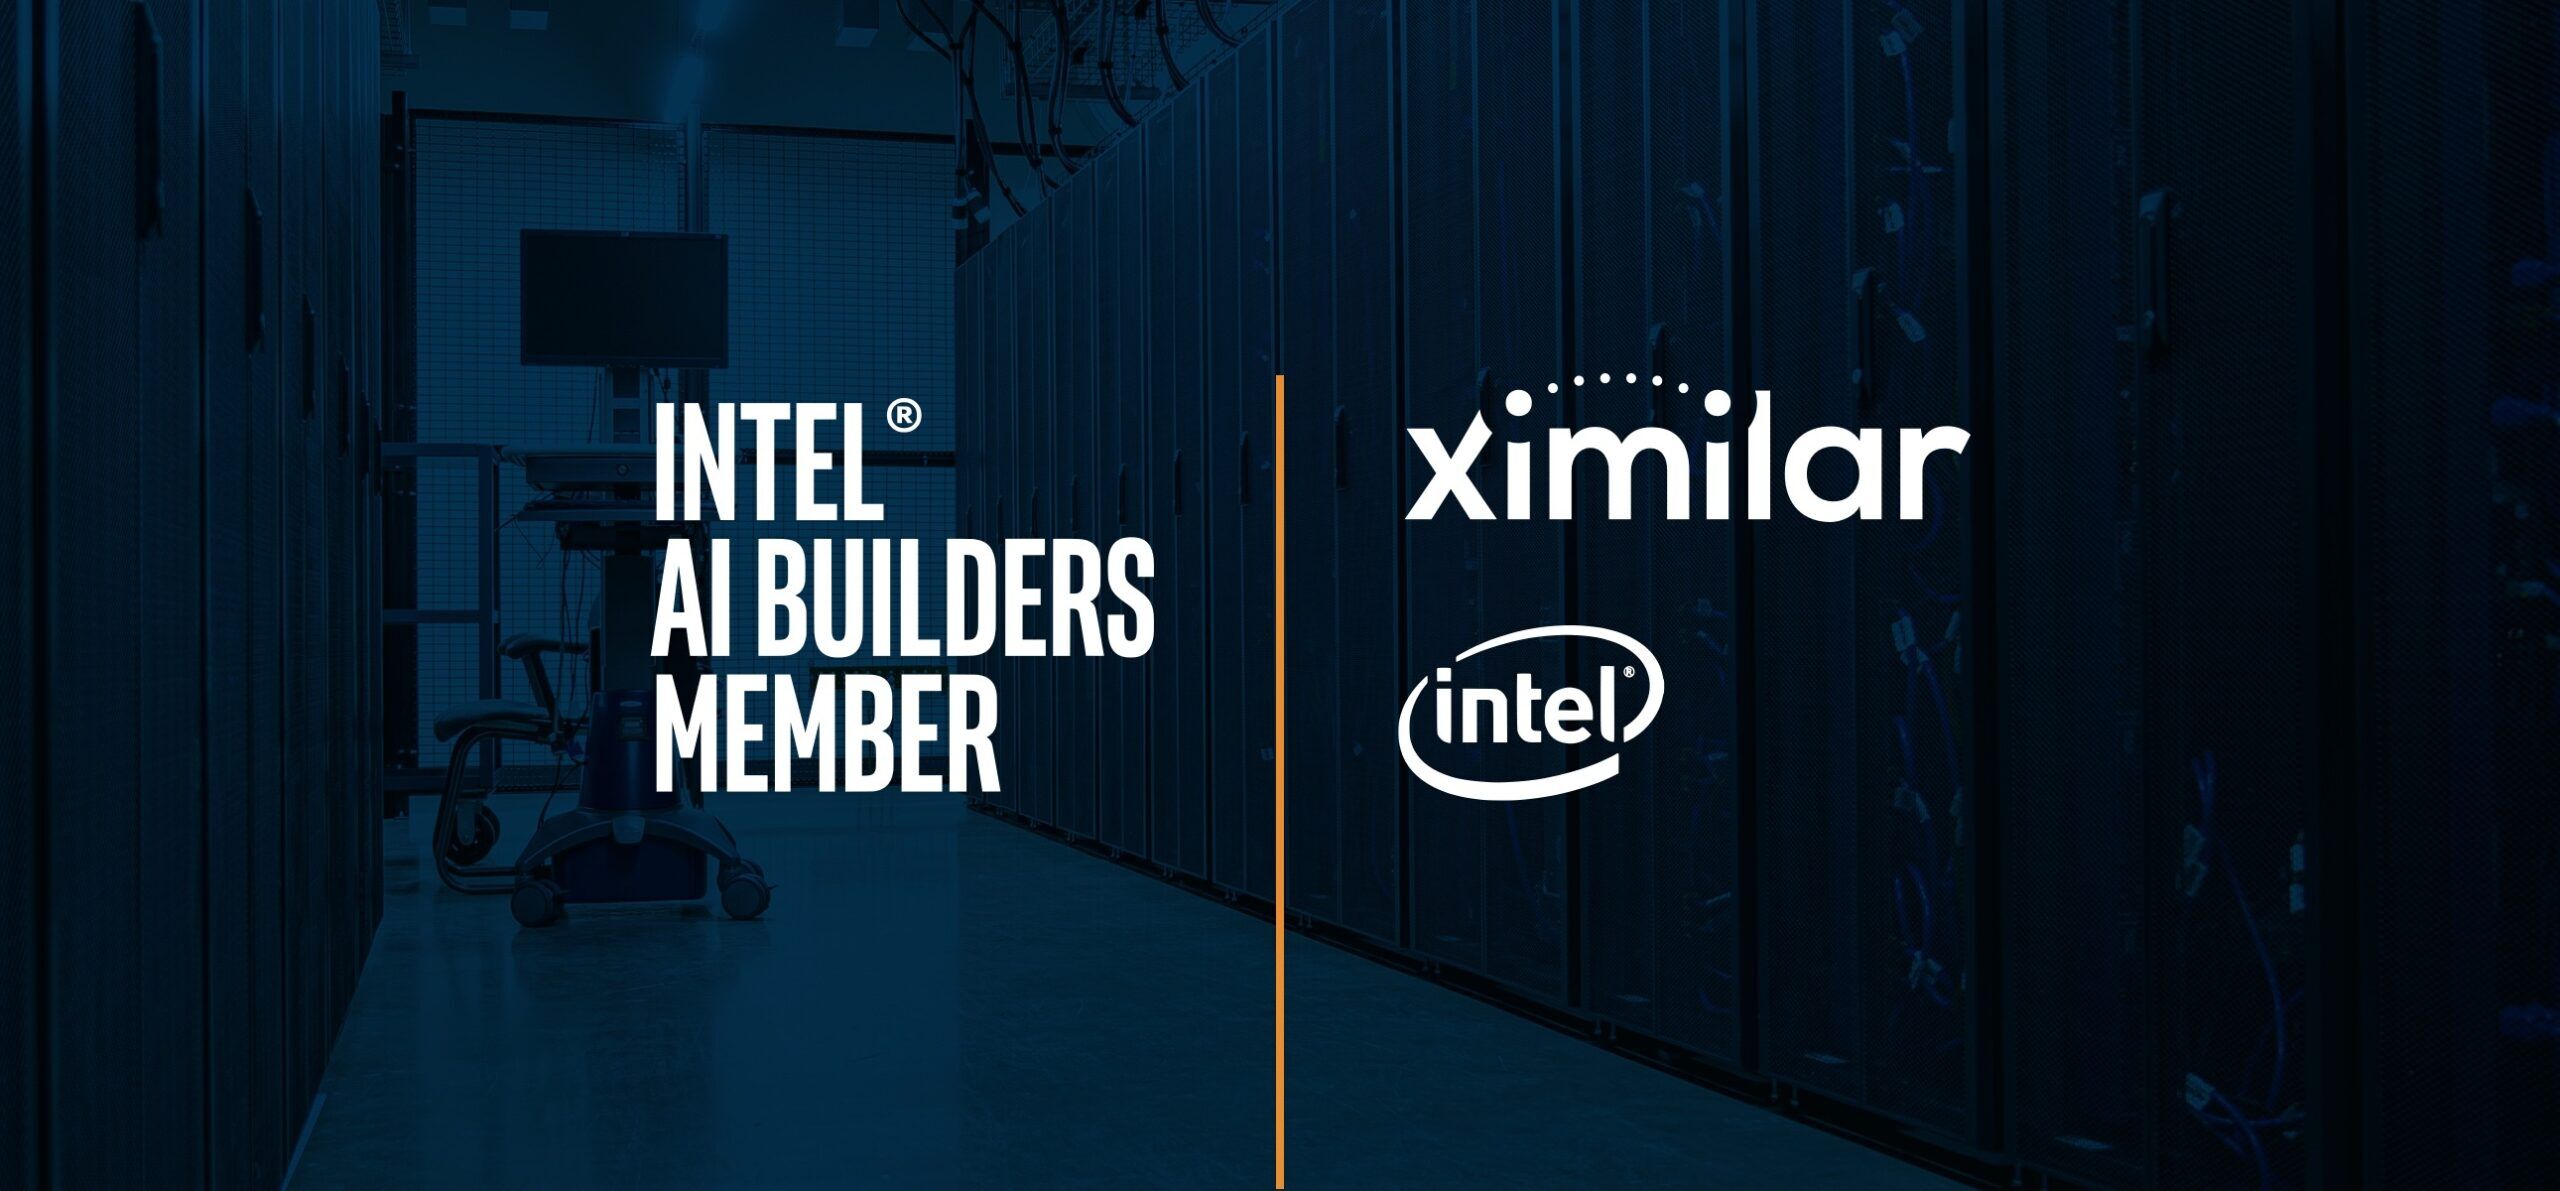 Ximilar is a member of Intel AI Builders